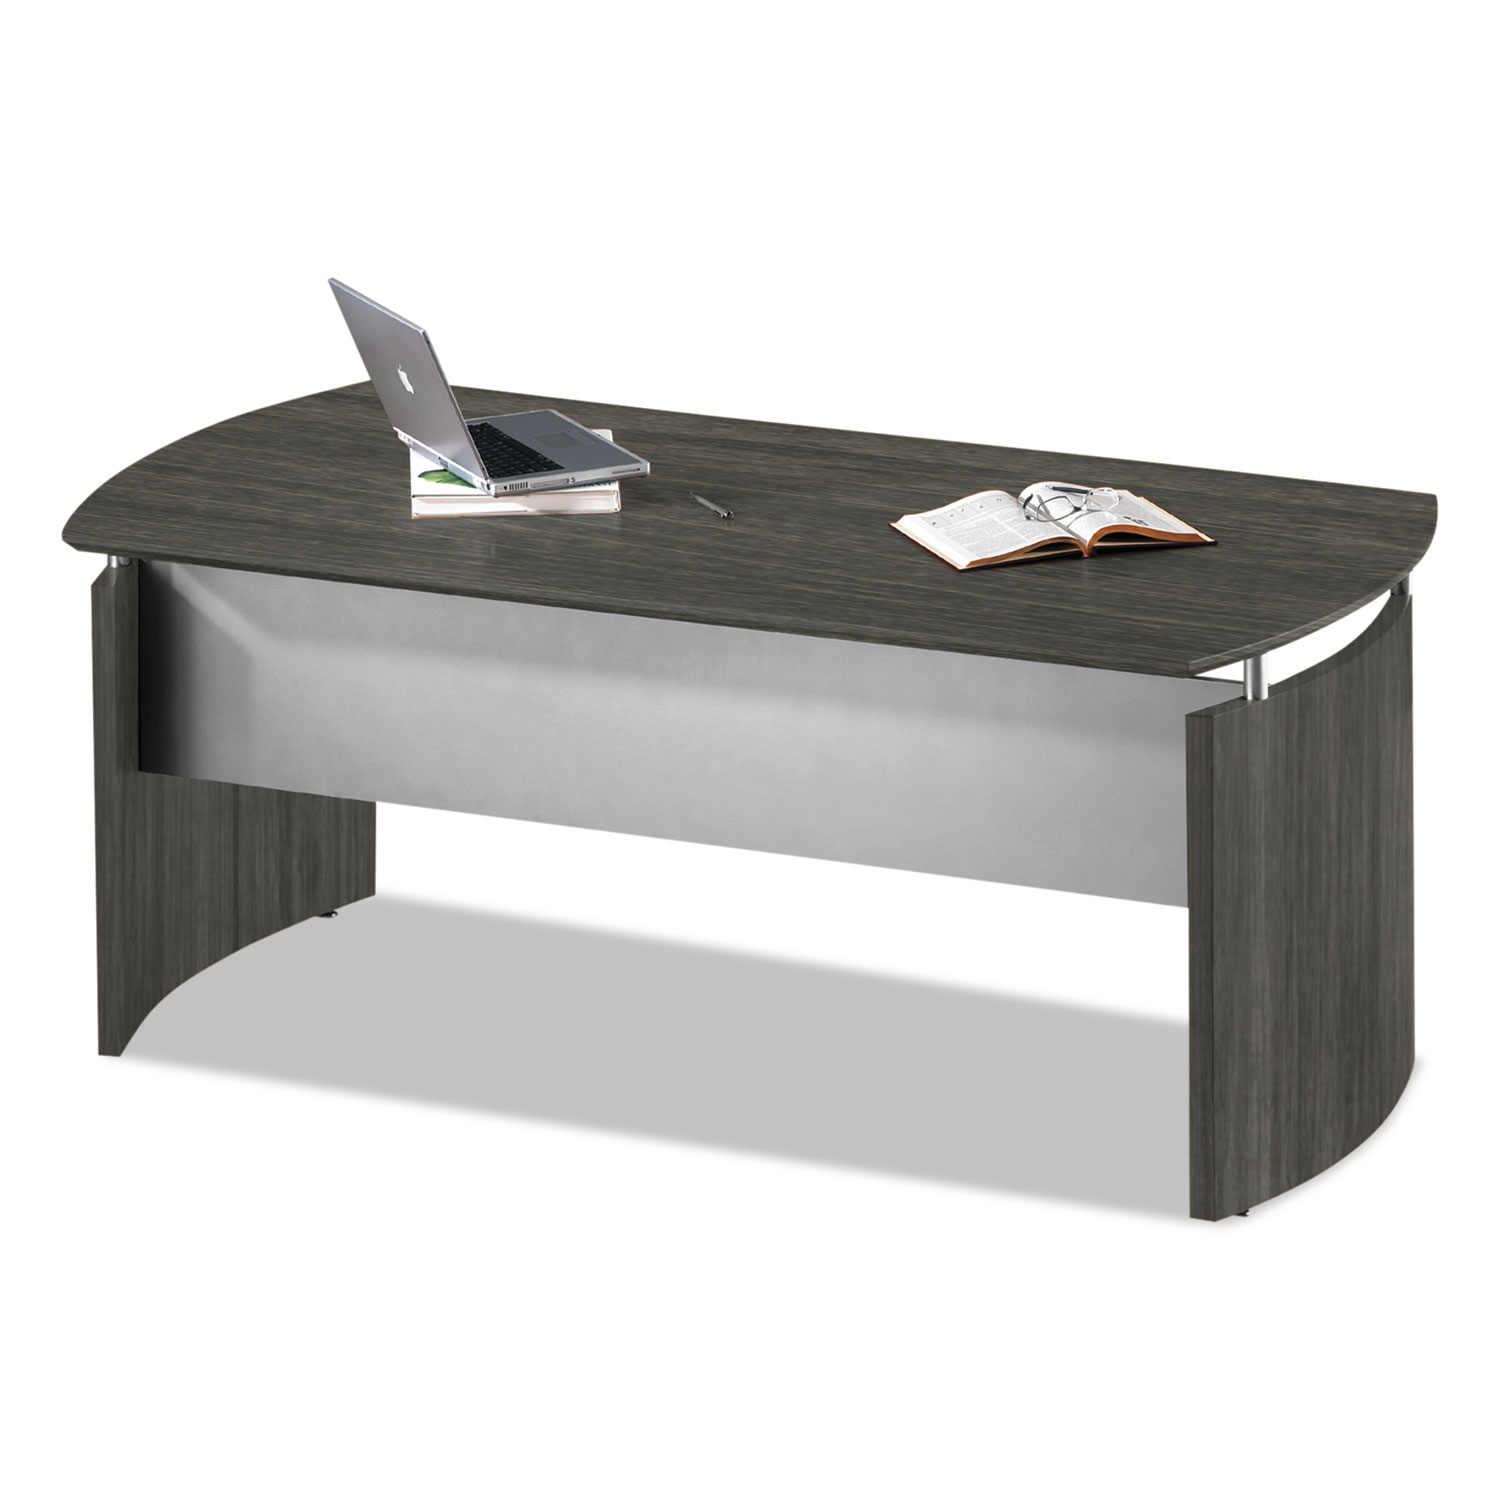  Safco MNDT72LGS Medina Series Laminate Curved Desk Top, 72w x 36d x 29.5h, Gray Steel (MLNMNDT72LGS) 